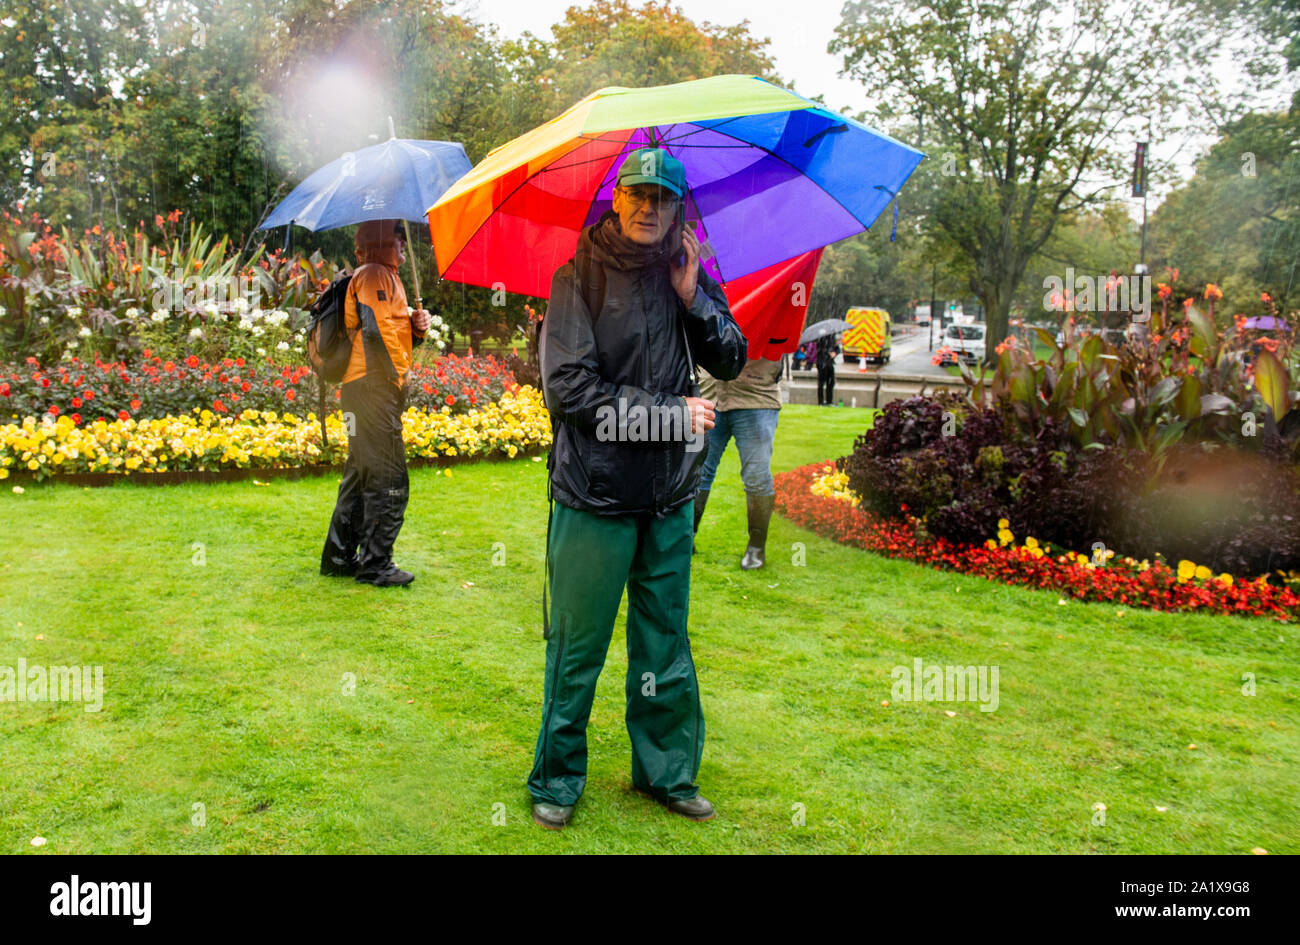 Ventilator verwendet große Regenbogen Regenschirm zum Schutz vor Regen am letzten Tag der UCI Rad WM, Harrogate, UK, 29. September 2019 Stockfoto